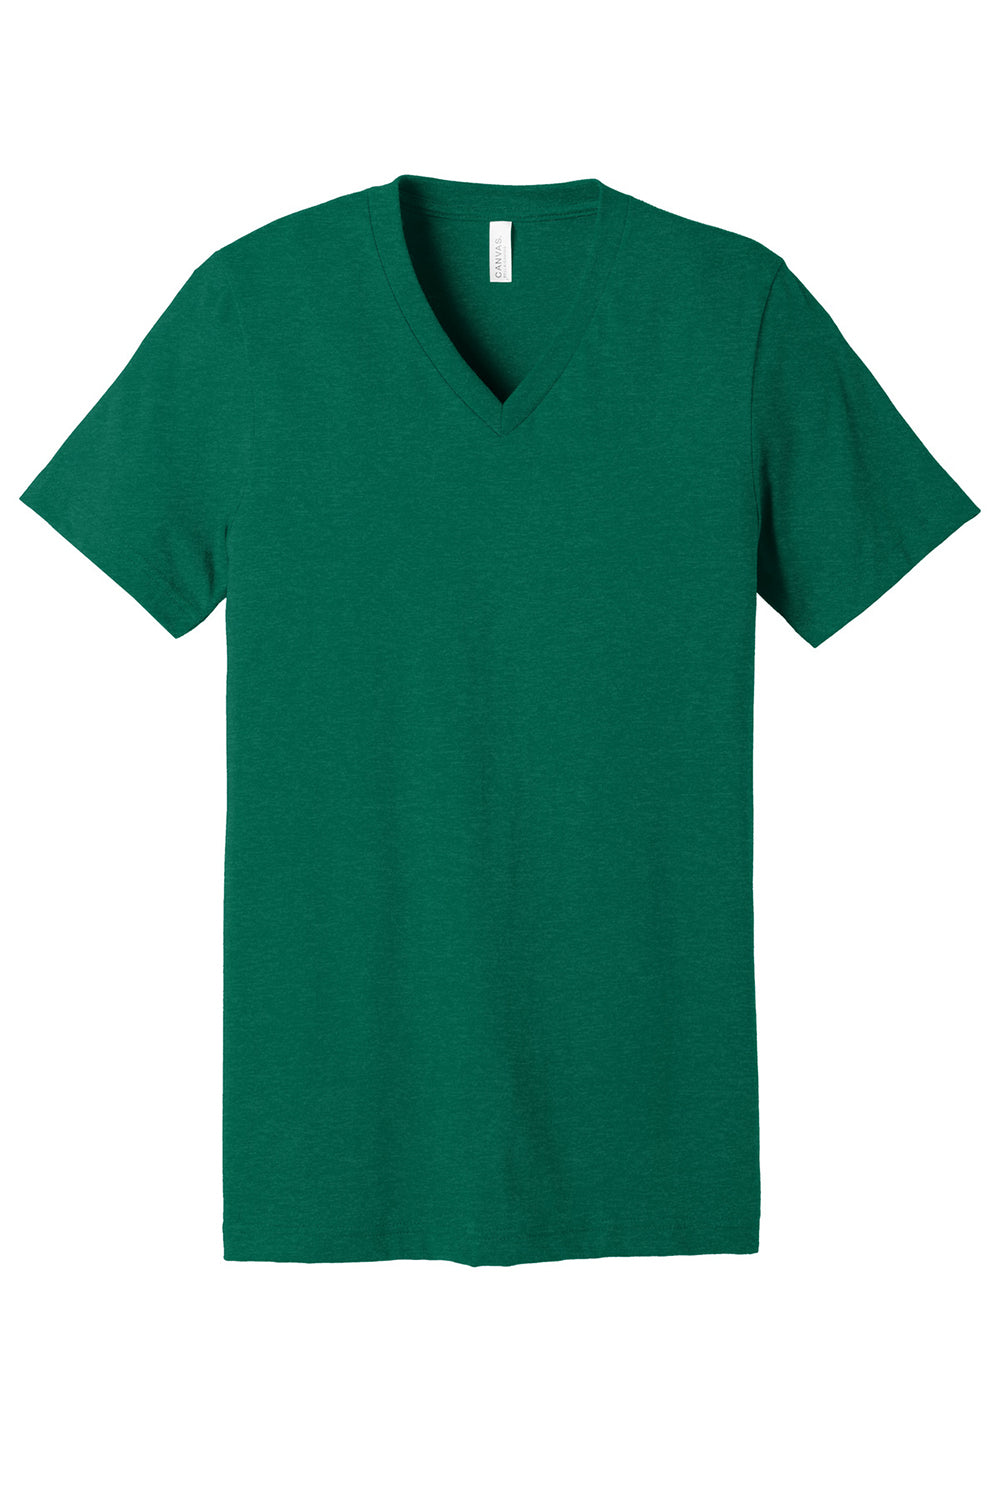 Bella + Canvas BC3005CVC Mens CVC Short Sleeve V-Neck T-Shirt Heather Grass Green Flat Front